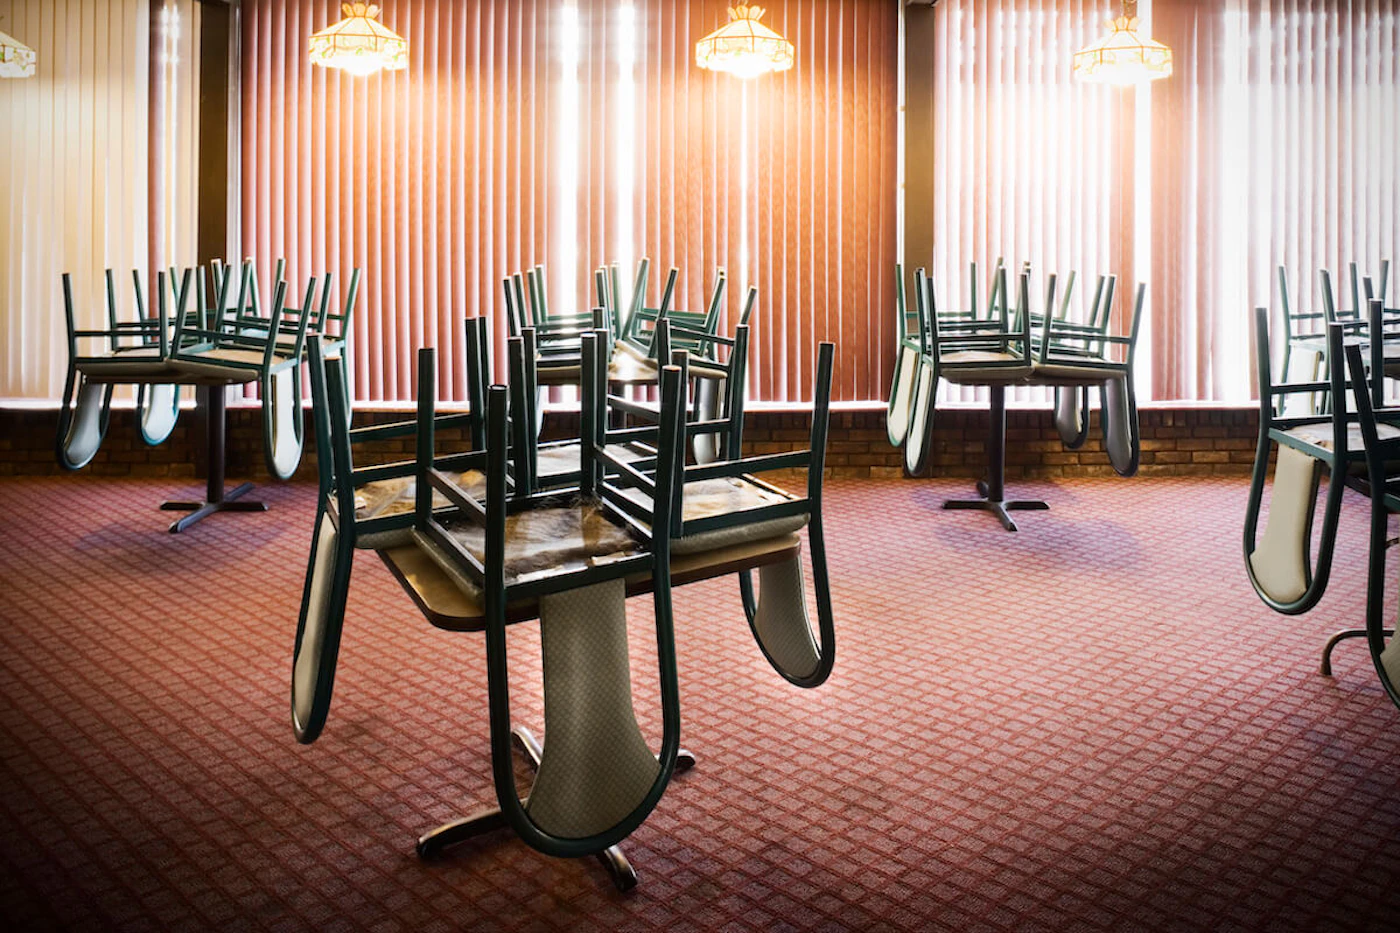 Empty restaurant